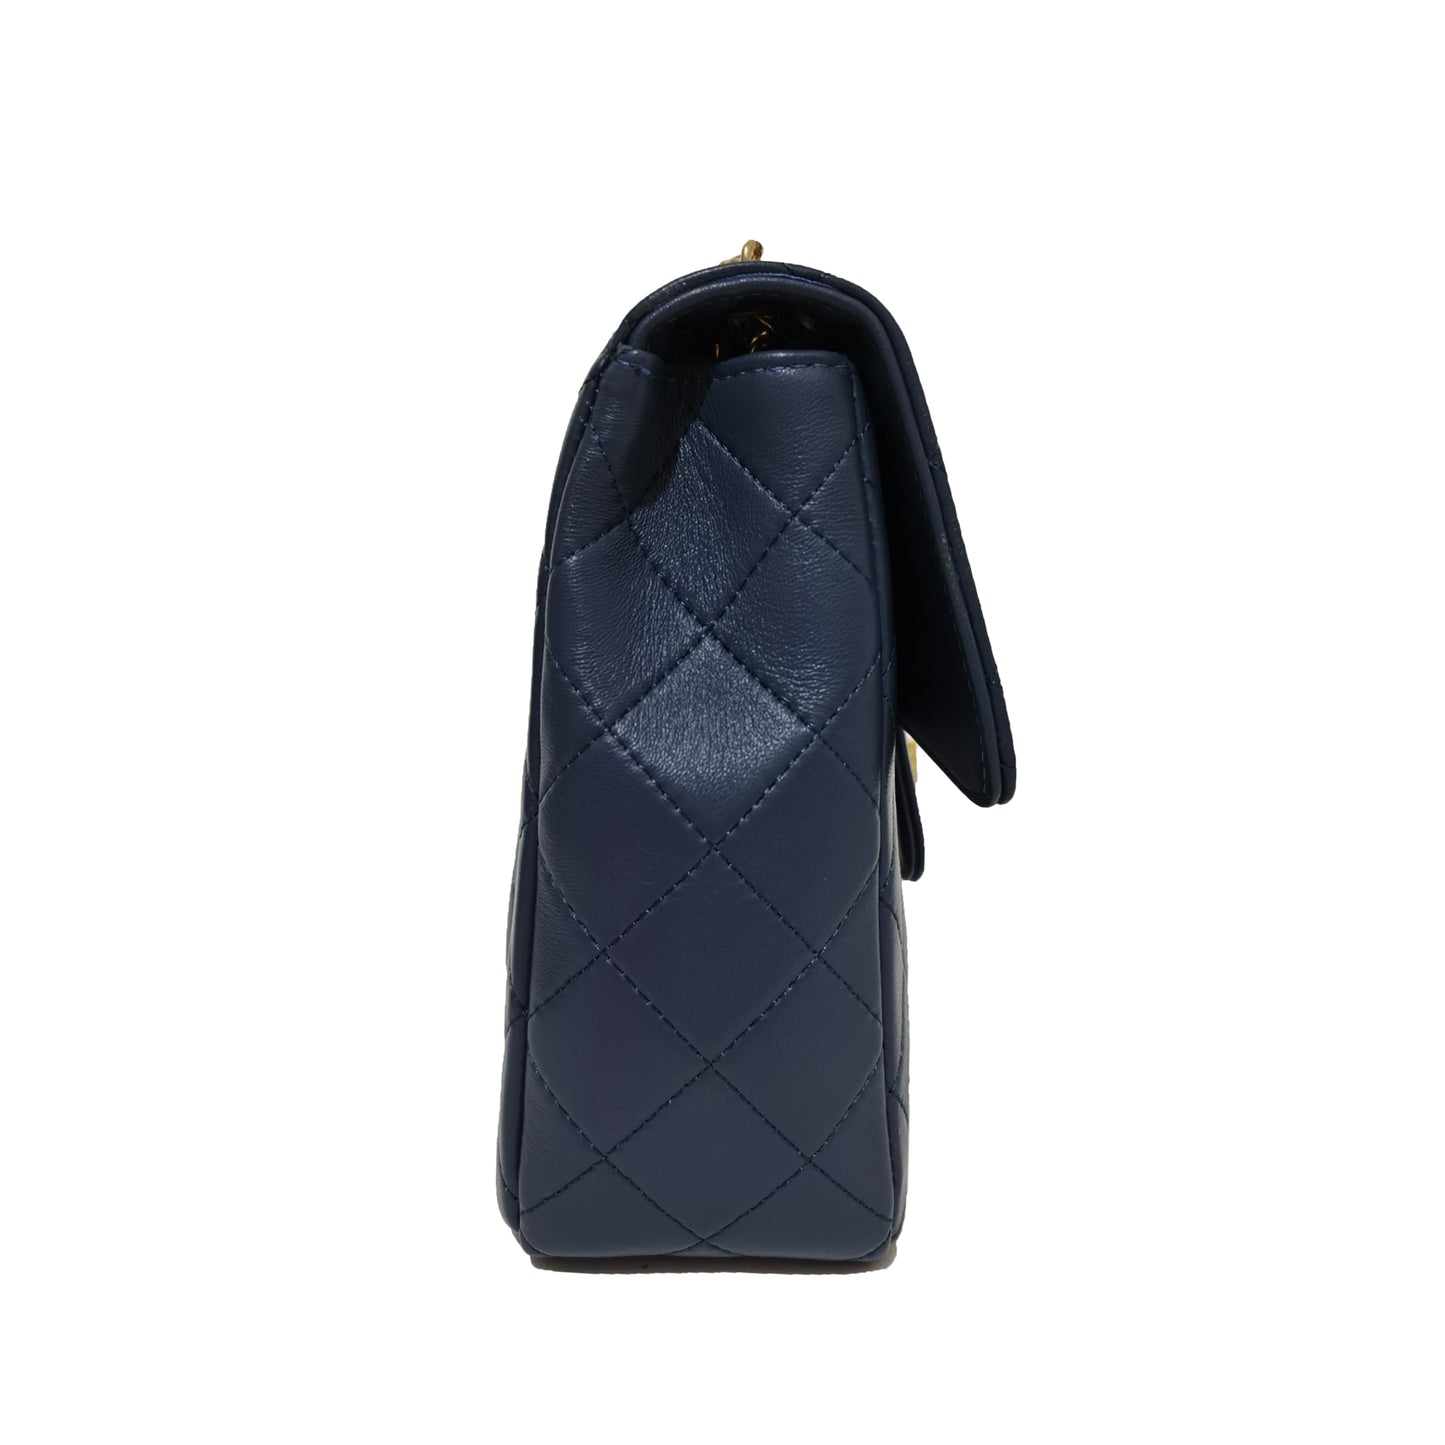 Women's leather crossbody handbag Vyar messenger bag design by Tomorrow Closet